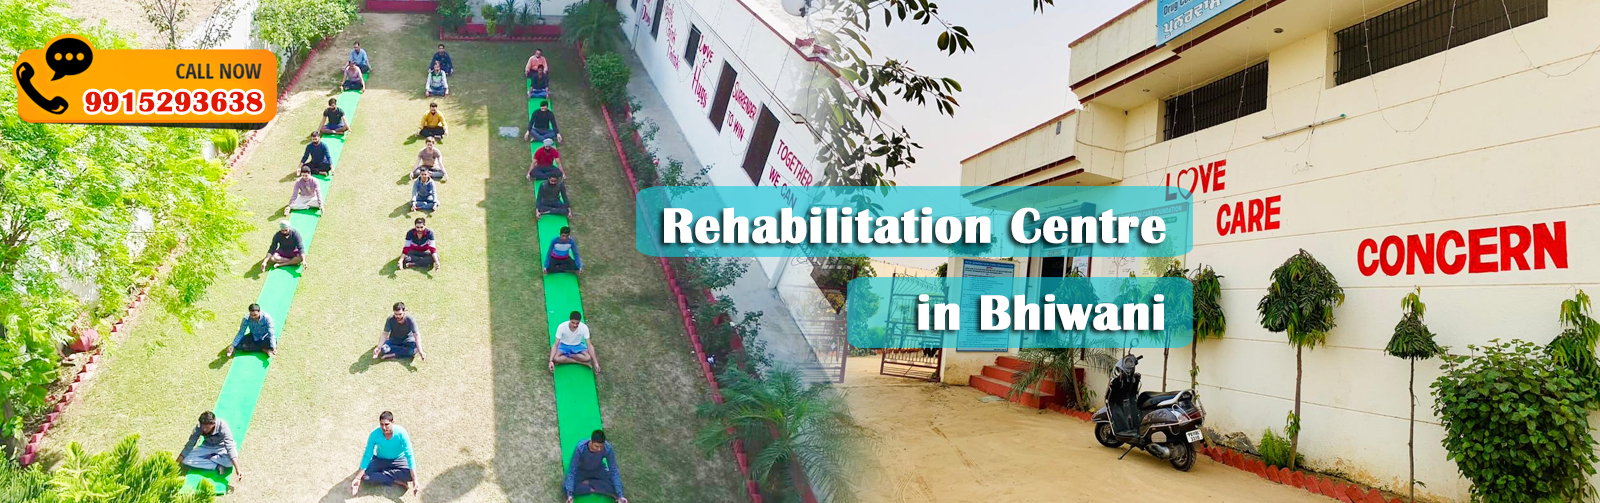 Rehabilitation Centre in Bhiwani